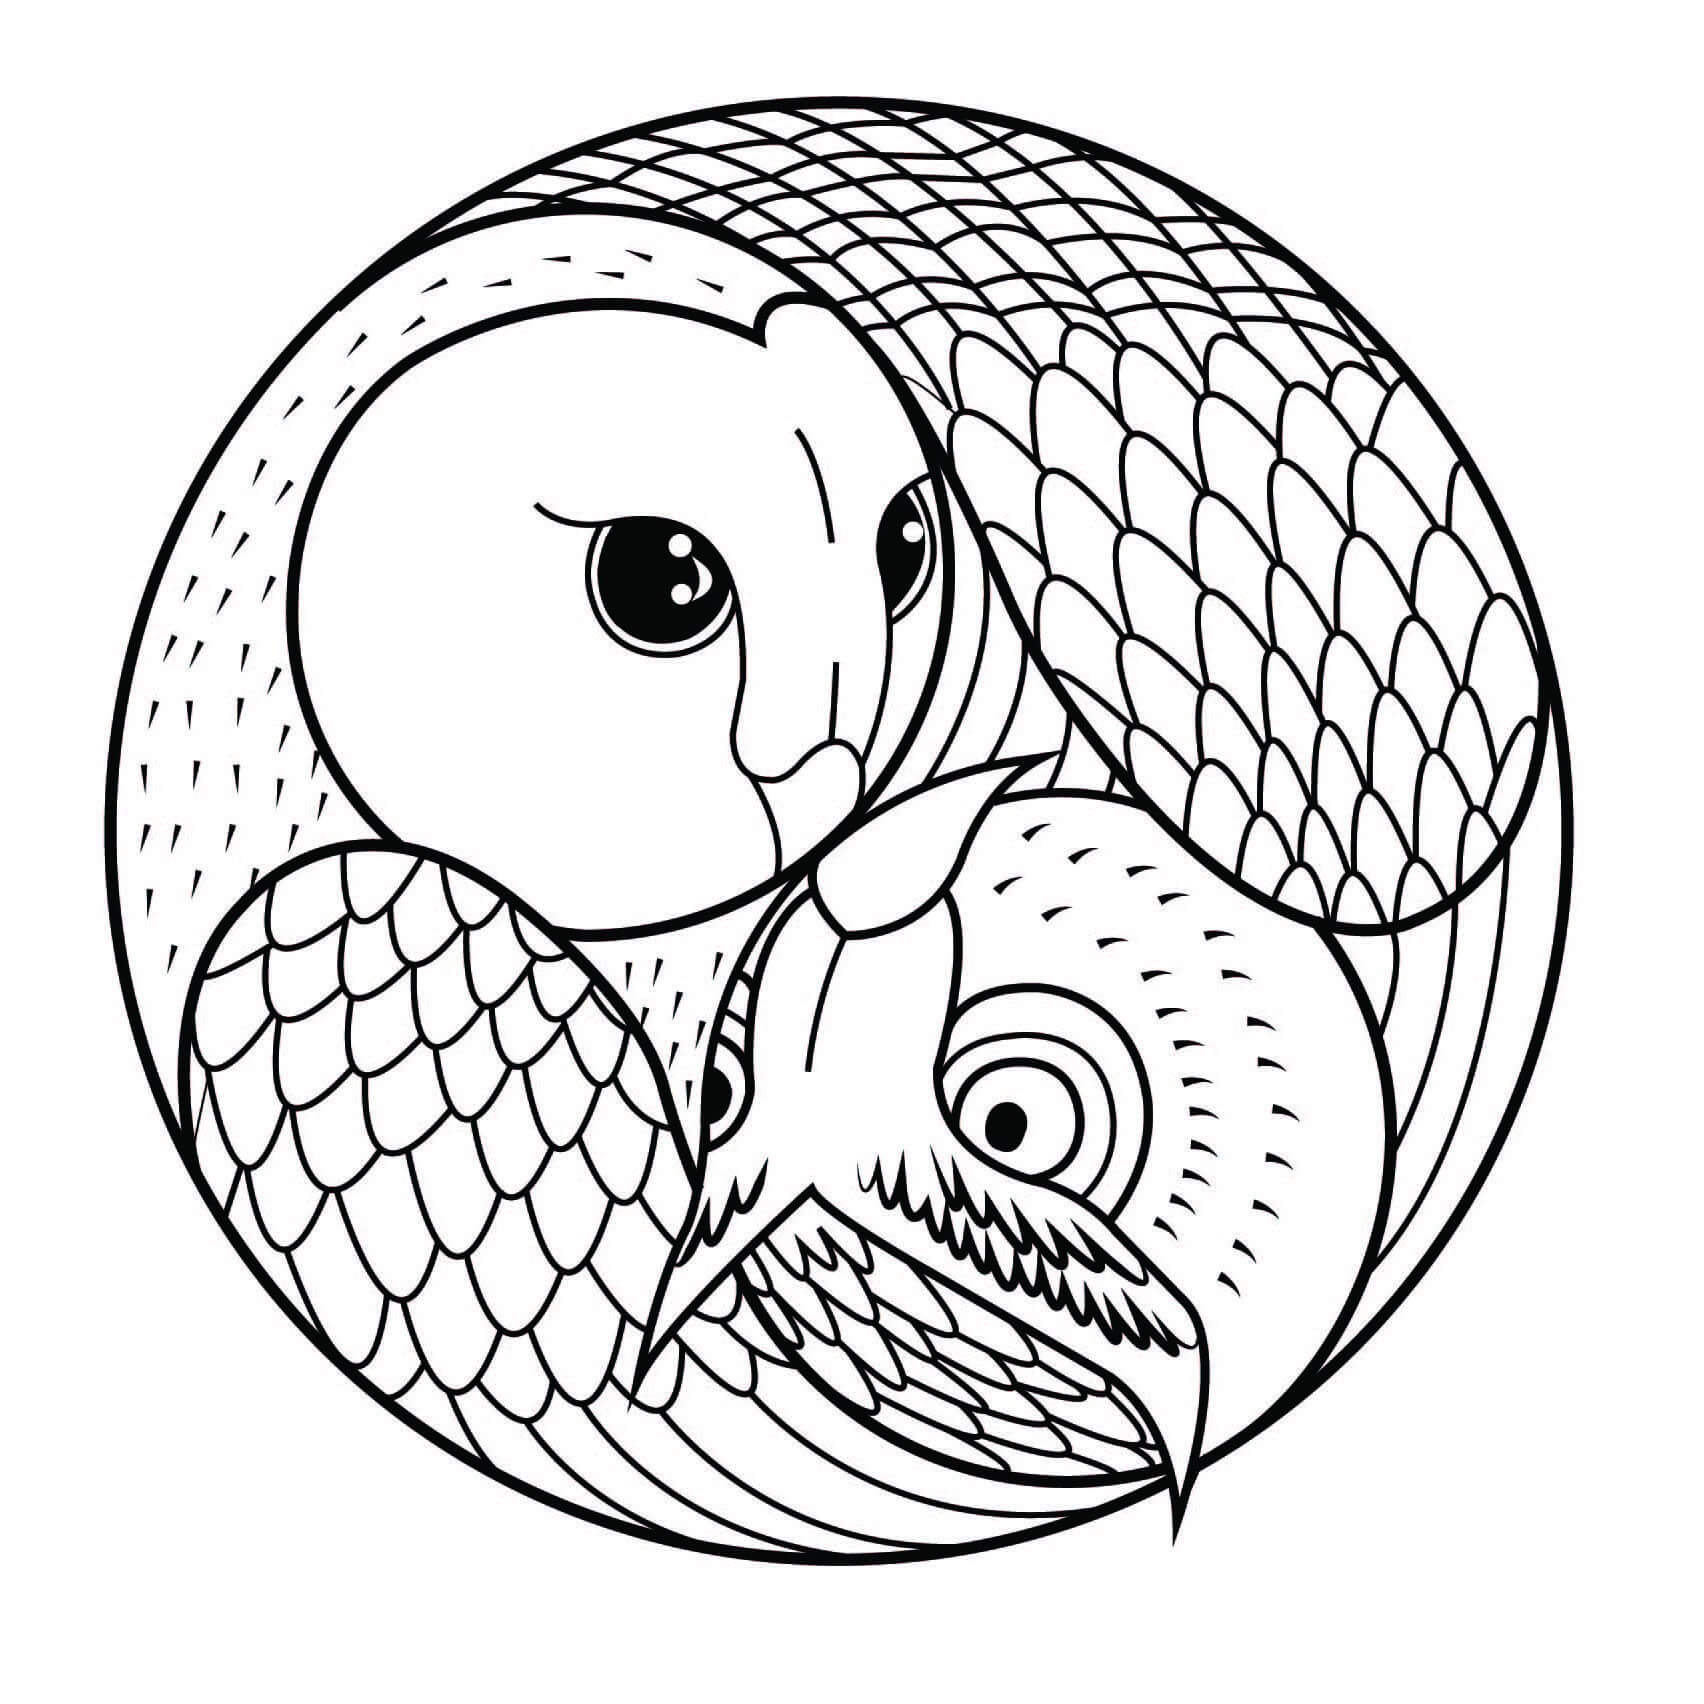 Mandala Owl Coloring Page - Sheet 2 Mandalas